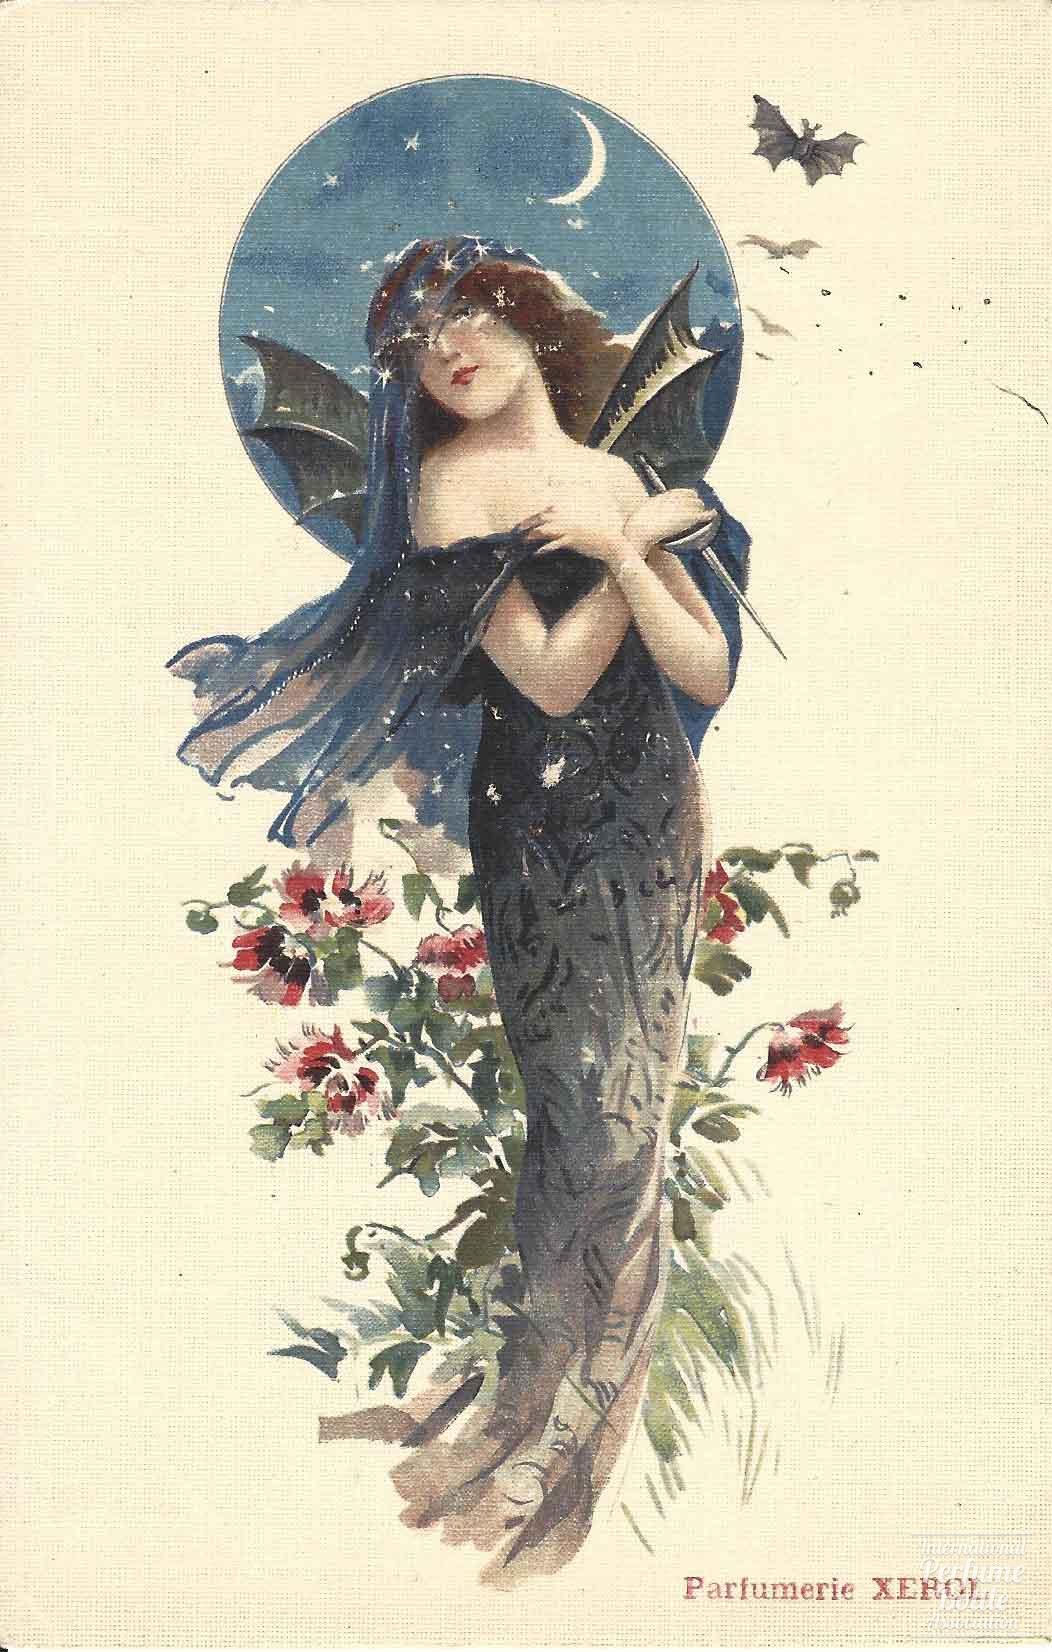 Fairy Postcard by Parfumerie Xerol